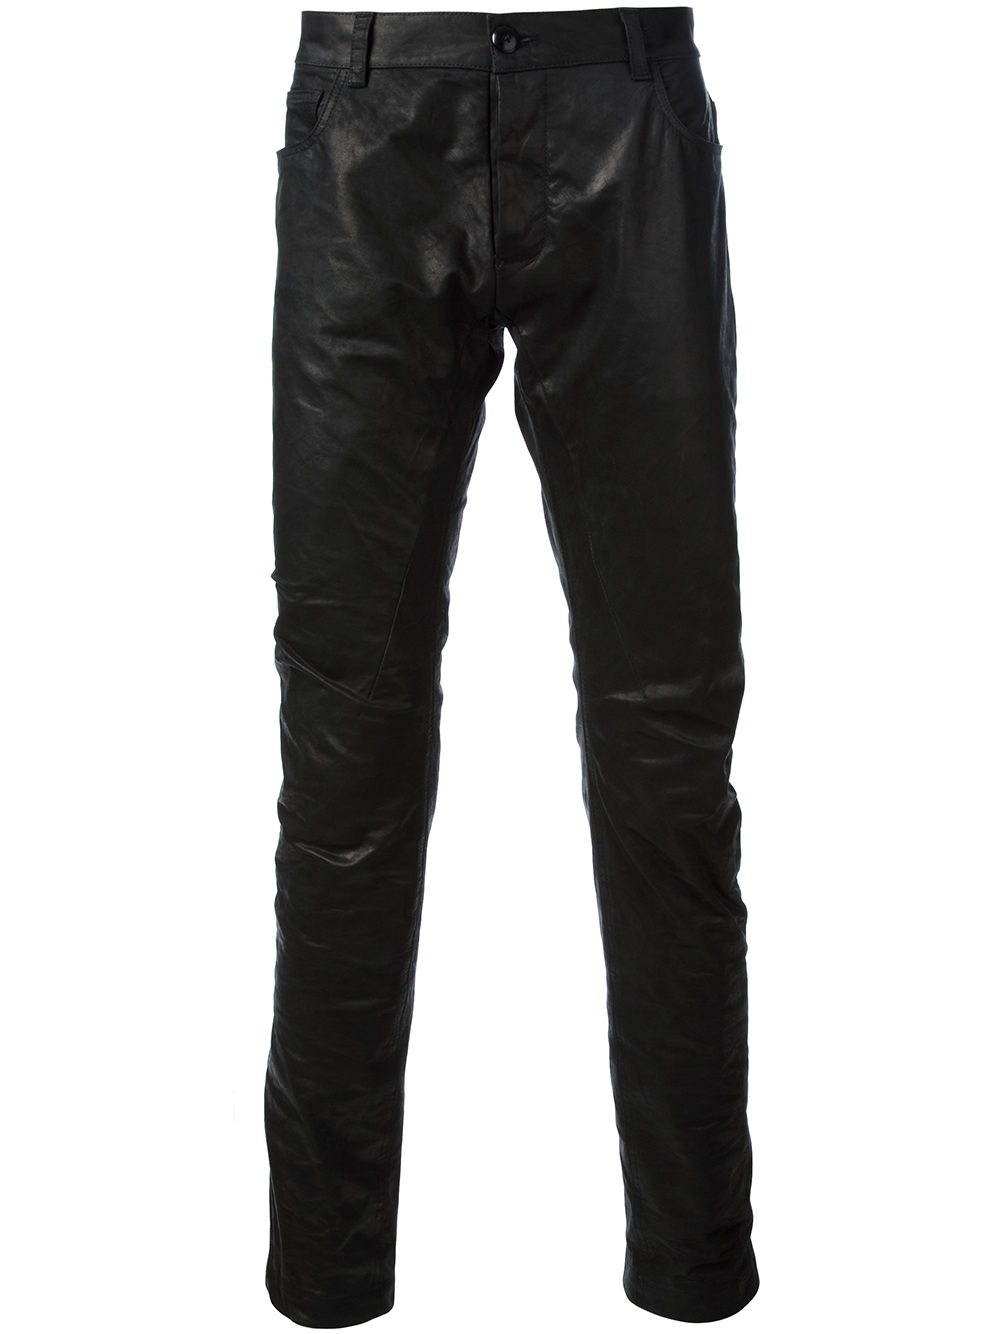 Rick Owens Detroit Leather Pant in Black for Men - Lyst